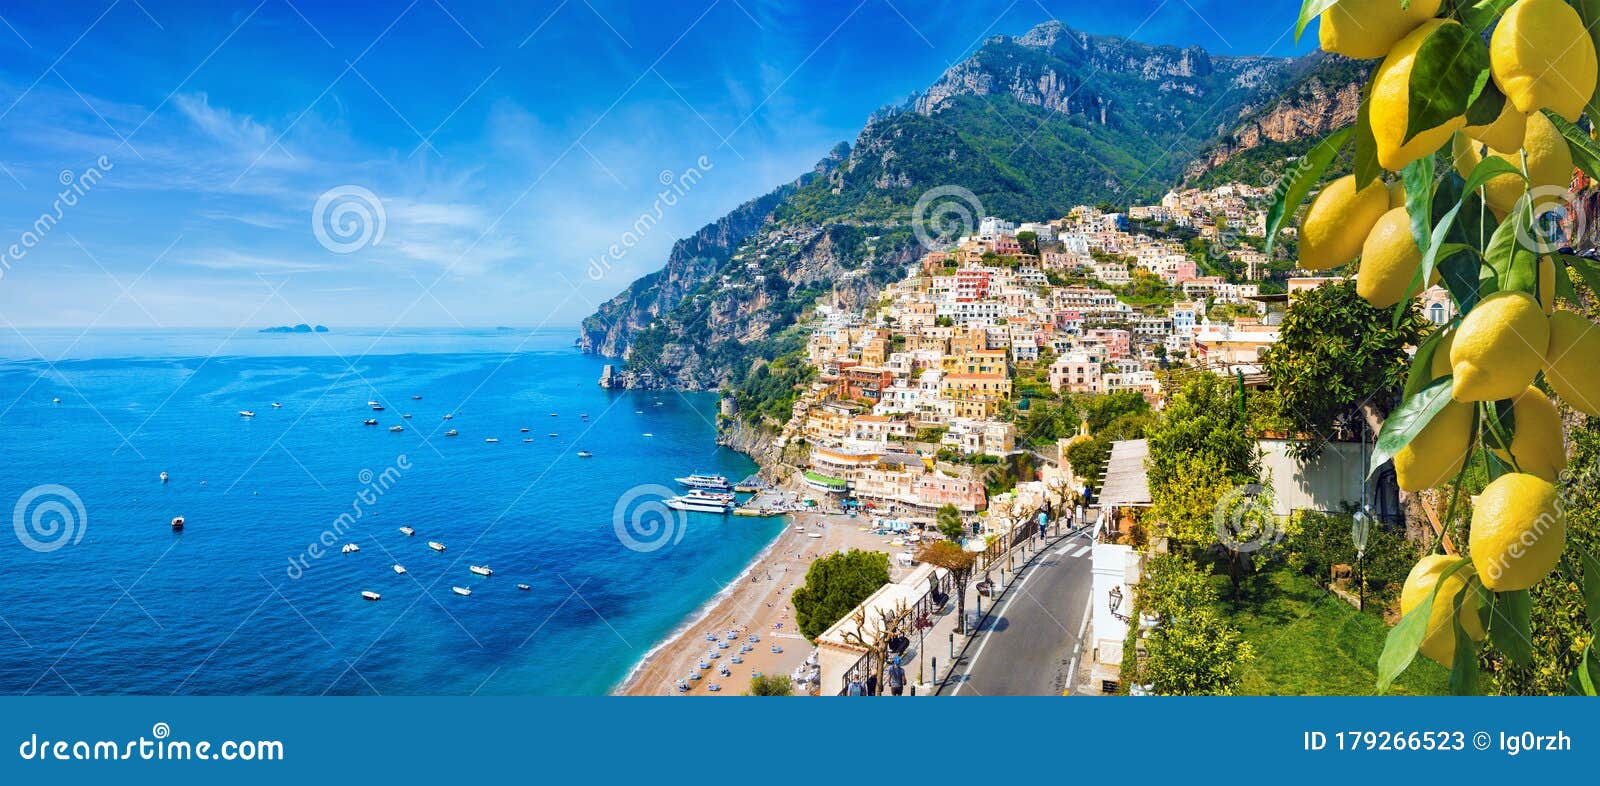 panoramic view of positano with comfortable beaches and blue sea on amalfi coast in campania, italy. amalfi coast is popular